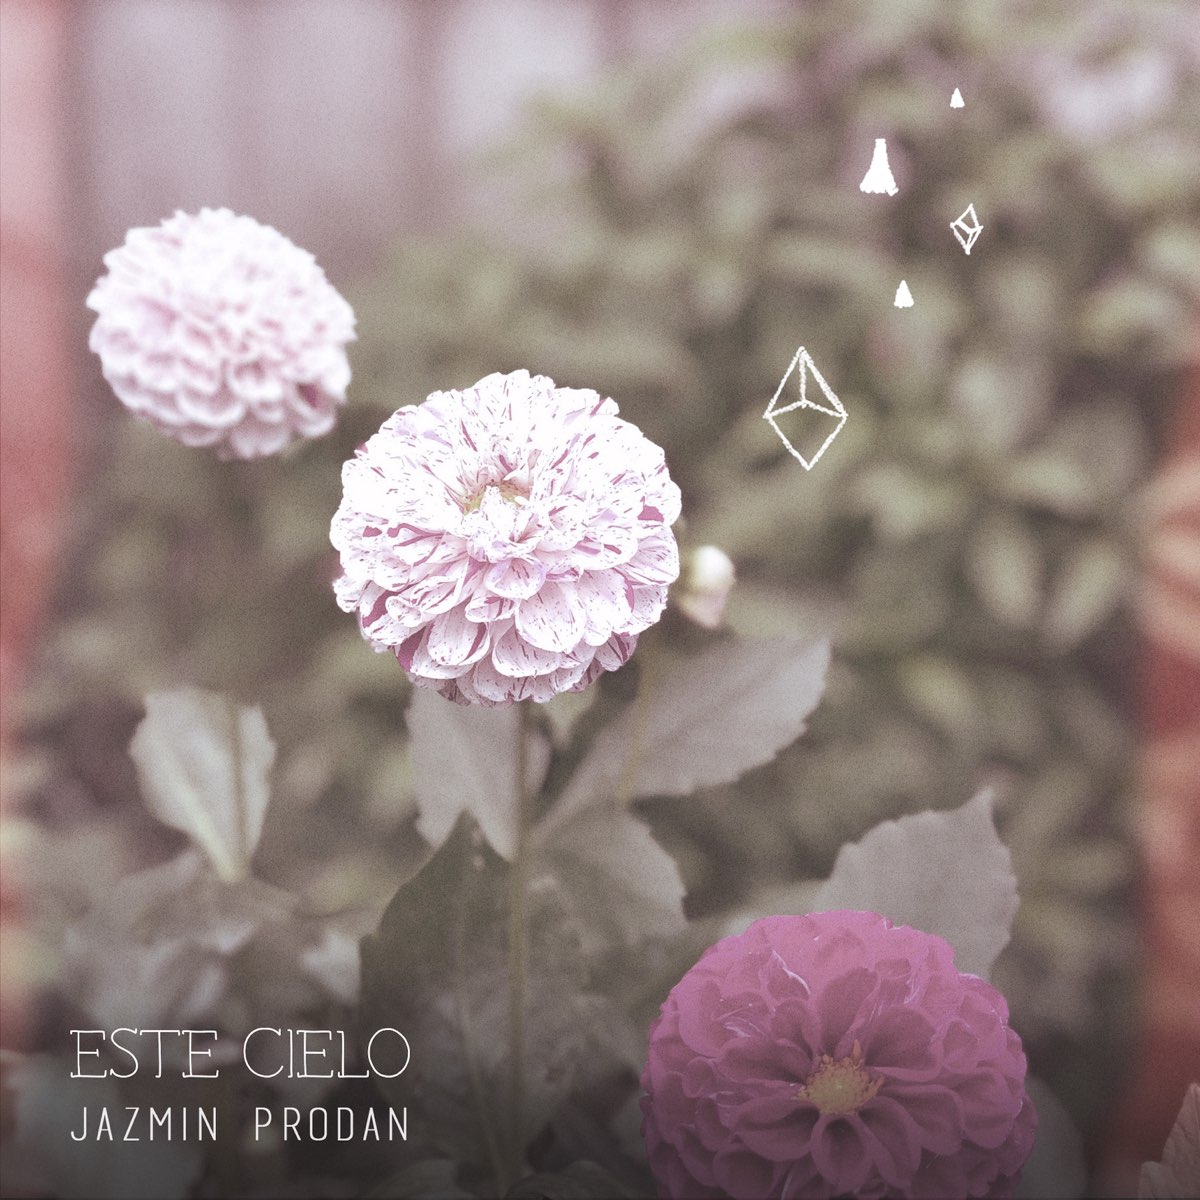 Este Cielo - Single de Jazmín Prodan en Apple Music